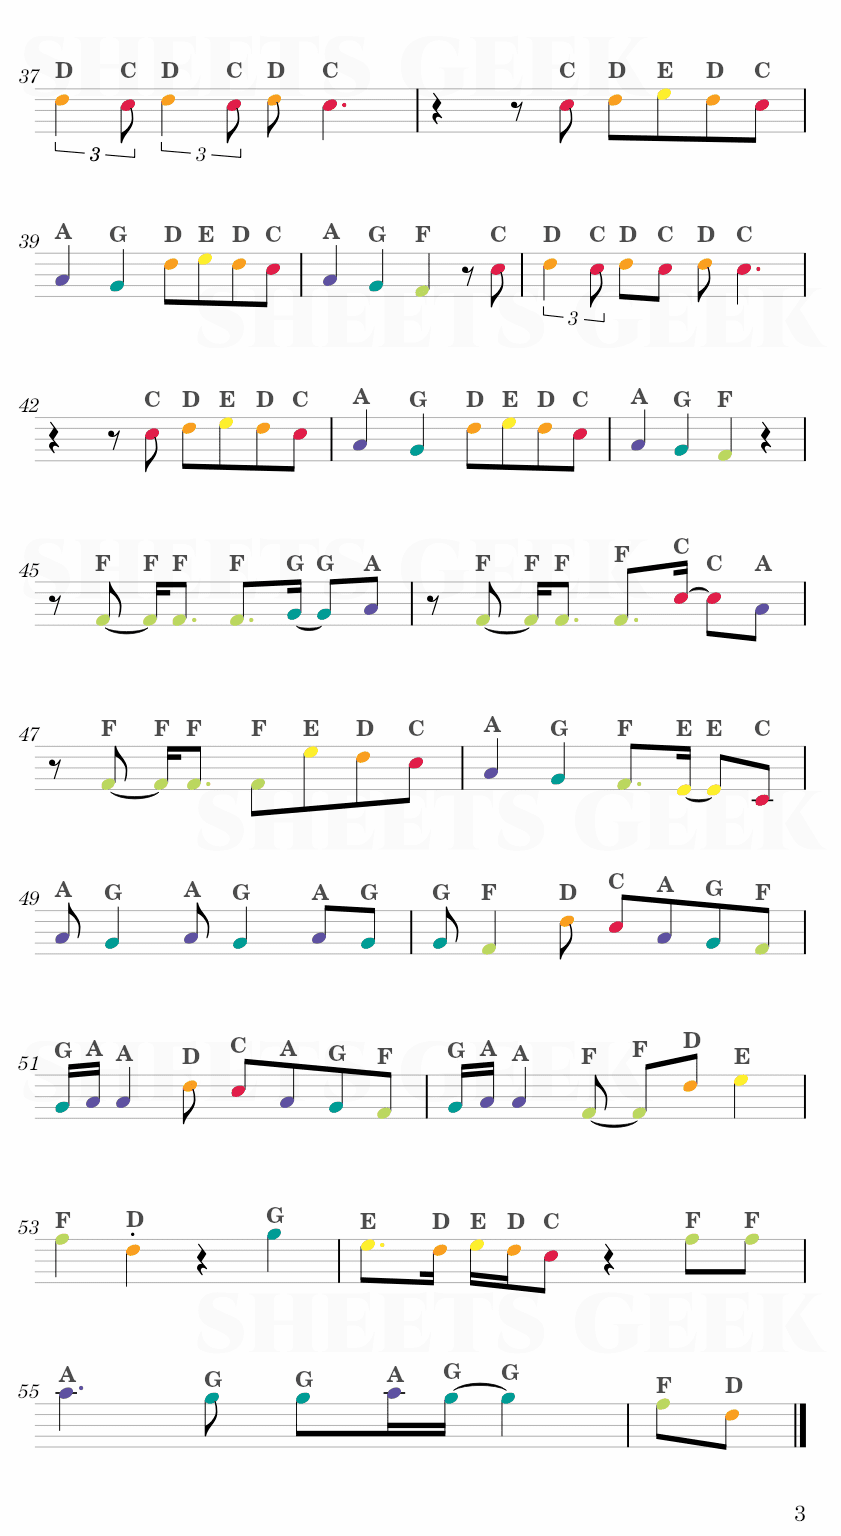 Happier - Marshmello ft. Bastille Easy Sheet Music Free for piano, keyboard, flute, violin, sax, cello page 3